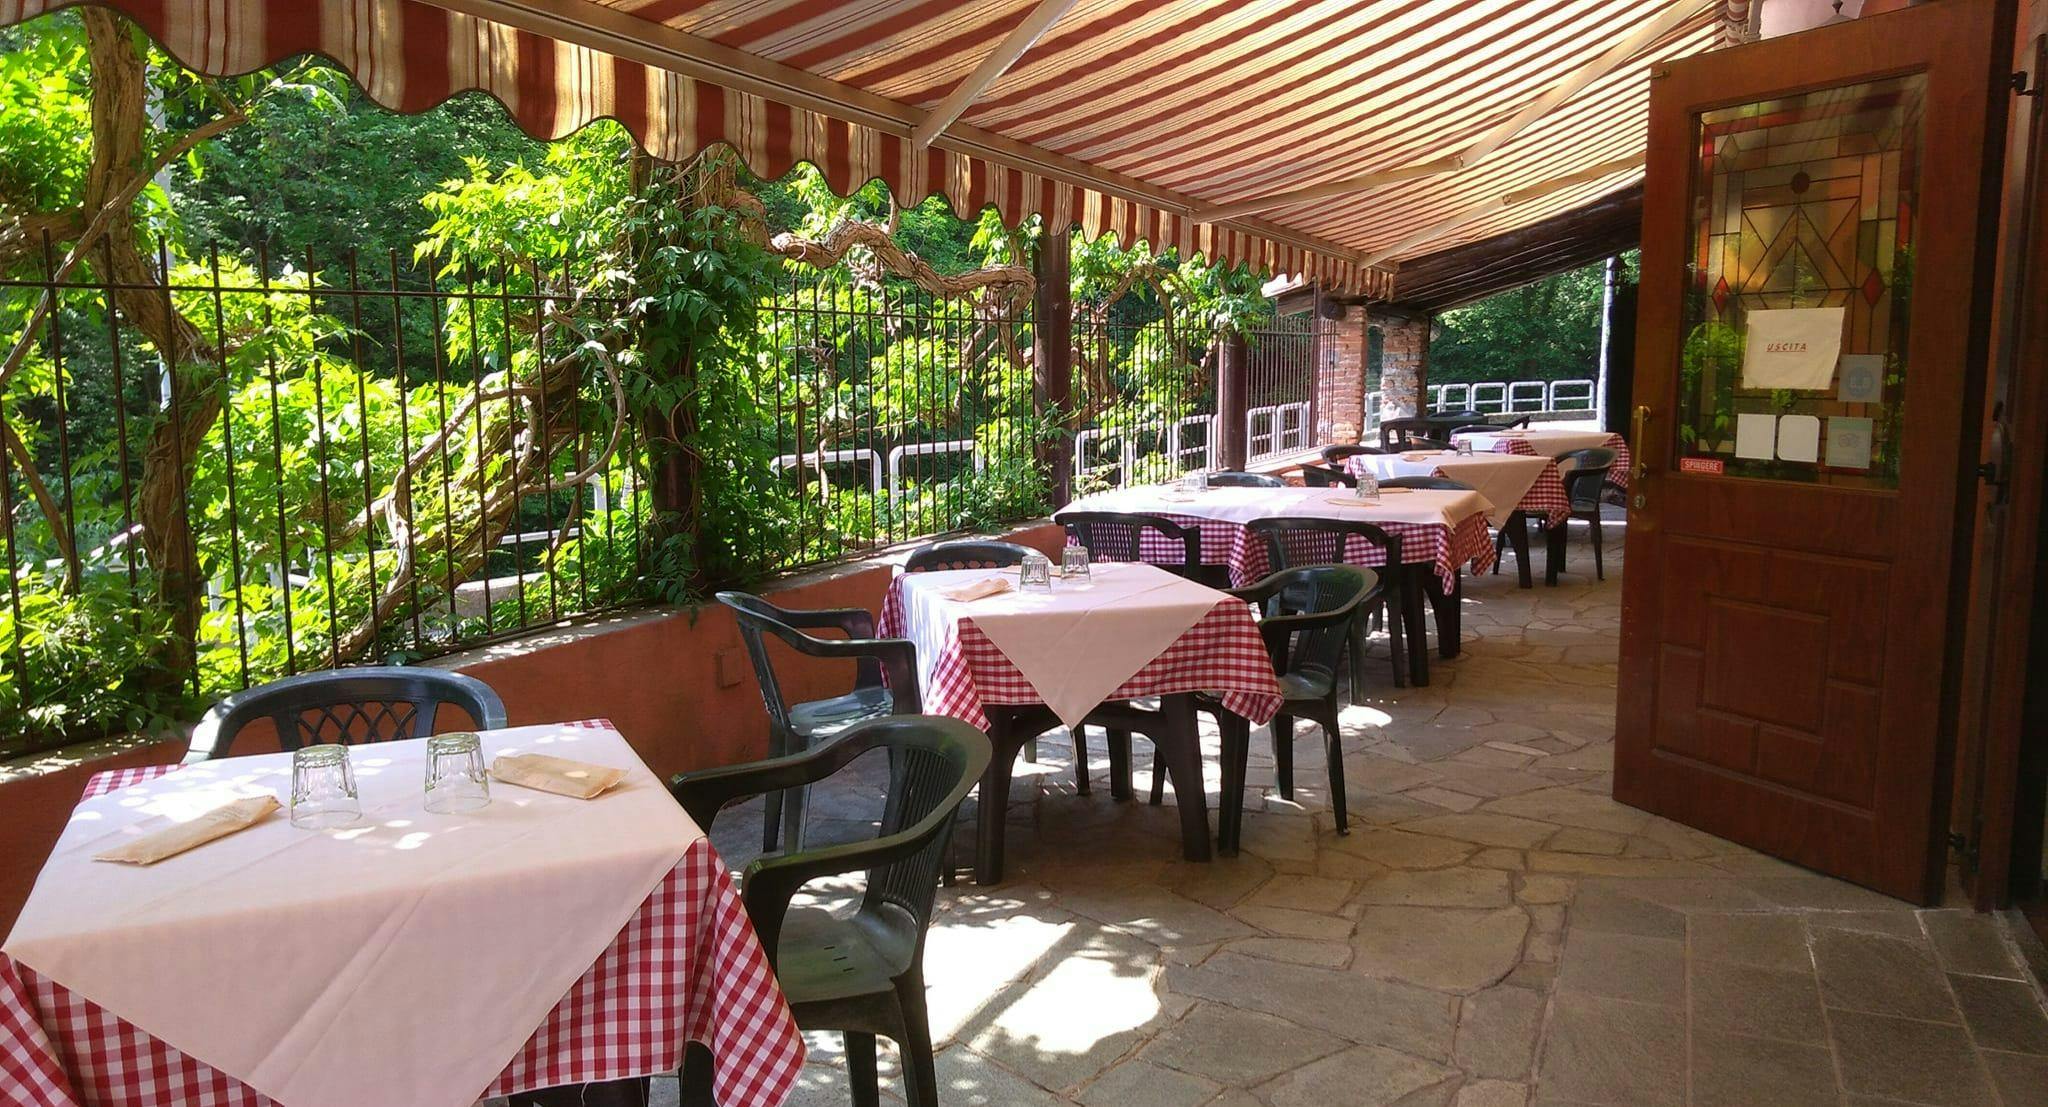 Photo of restaurant Hostaria da Edo - Trattoria, Pizzeria, Casa Vacanze in Civate, Lecco